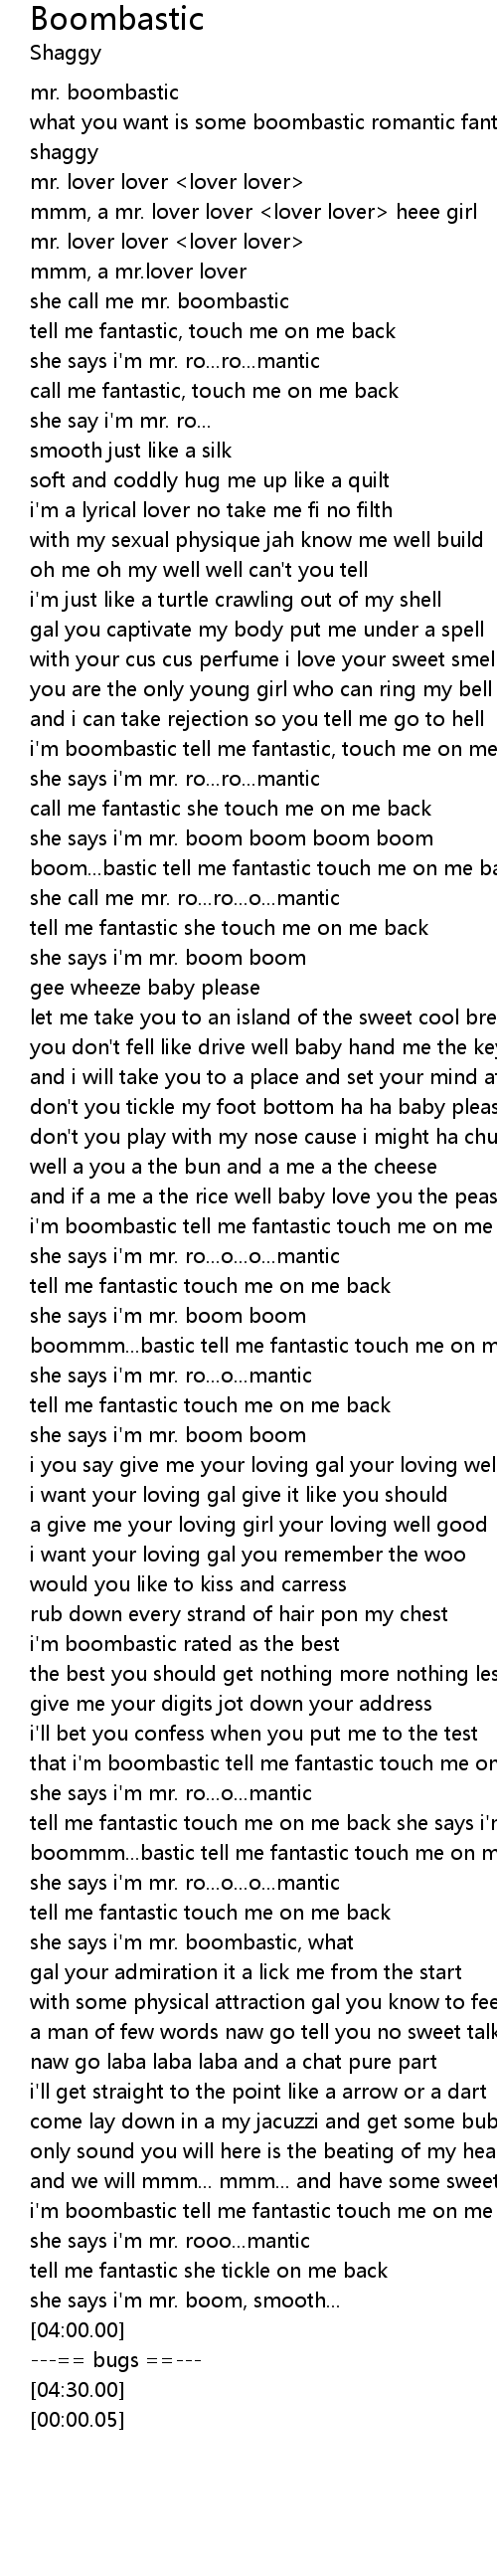 Shaggy – Boombastic Lyrics